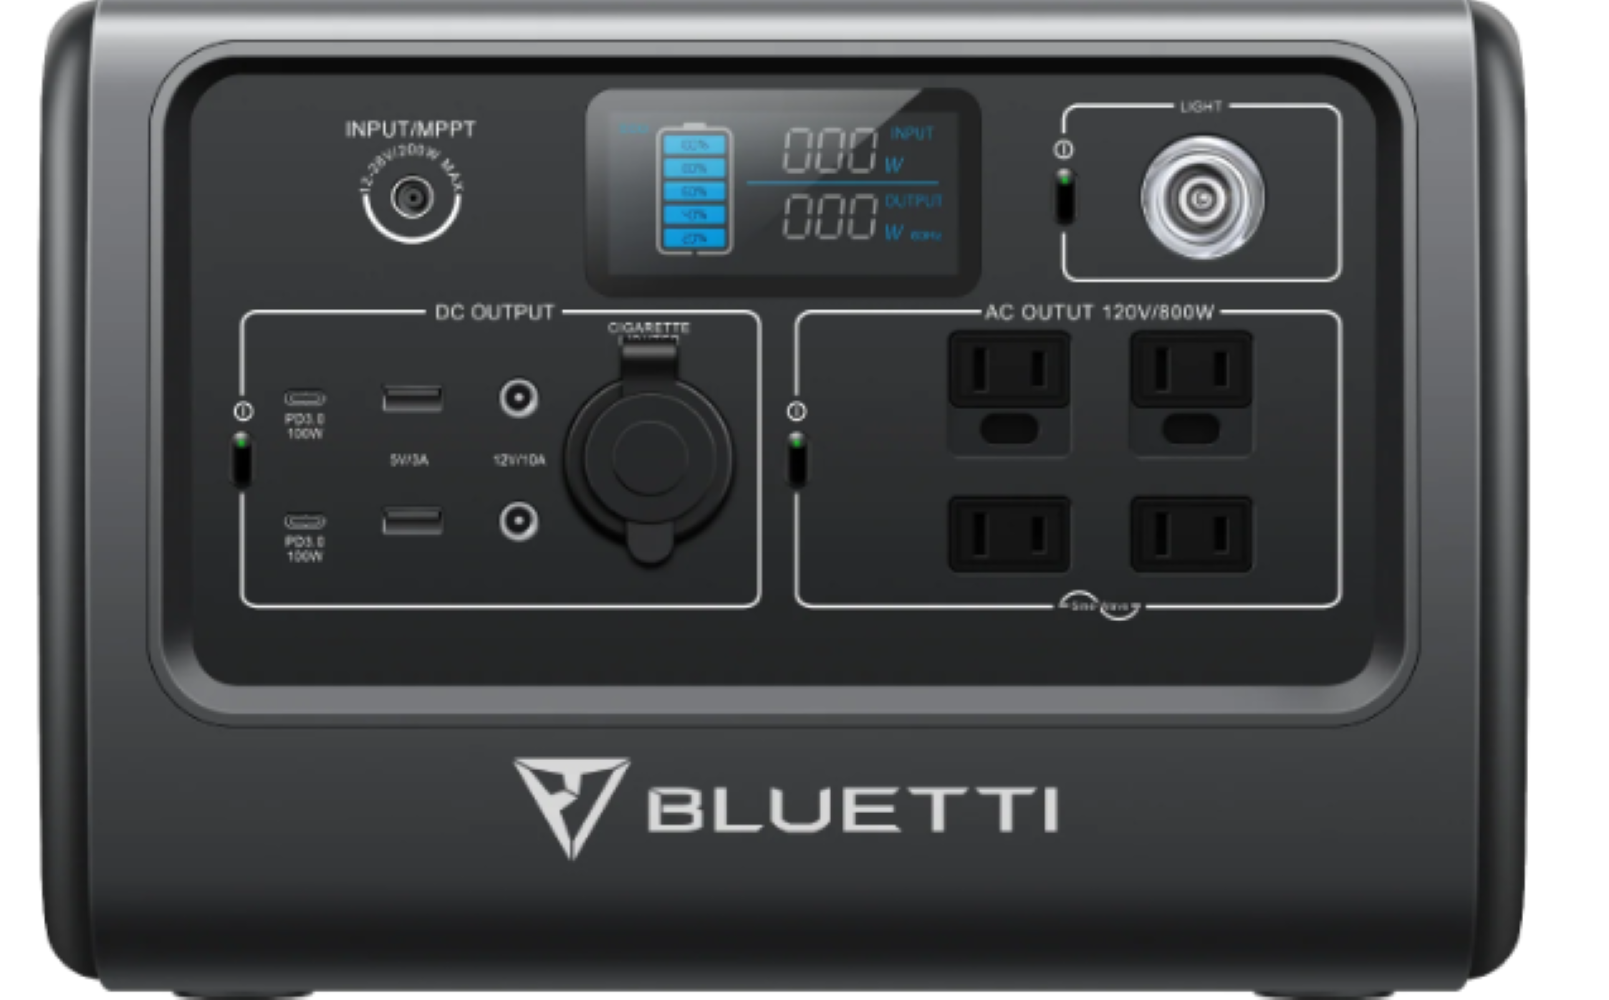 Bluetti AC180 power station review: Super efficient, super value